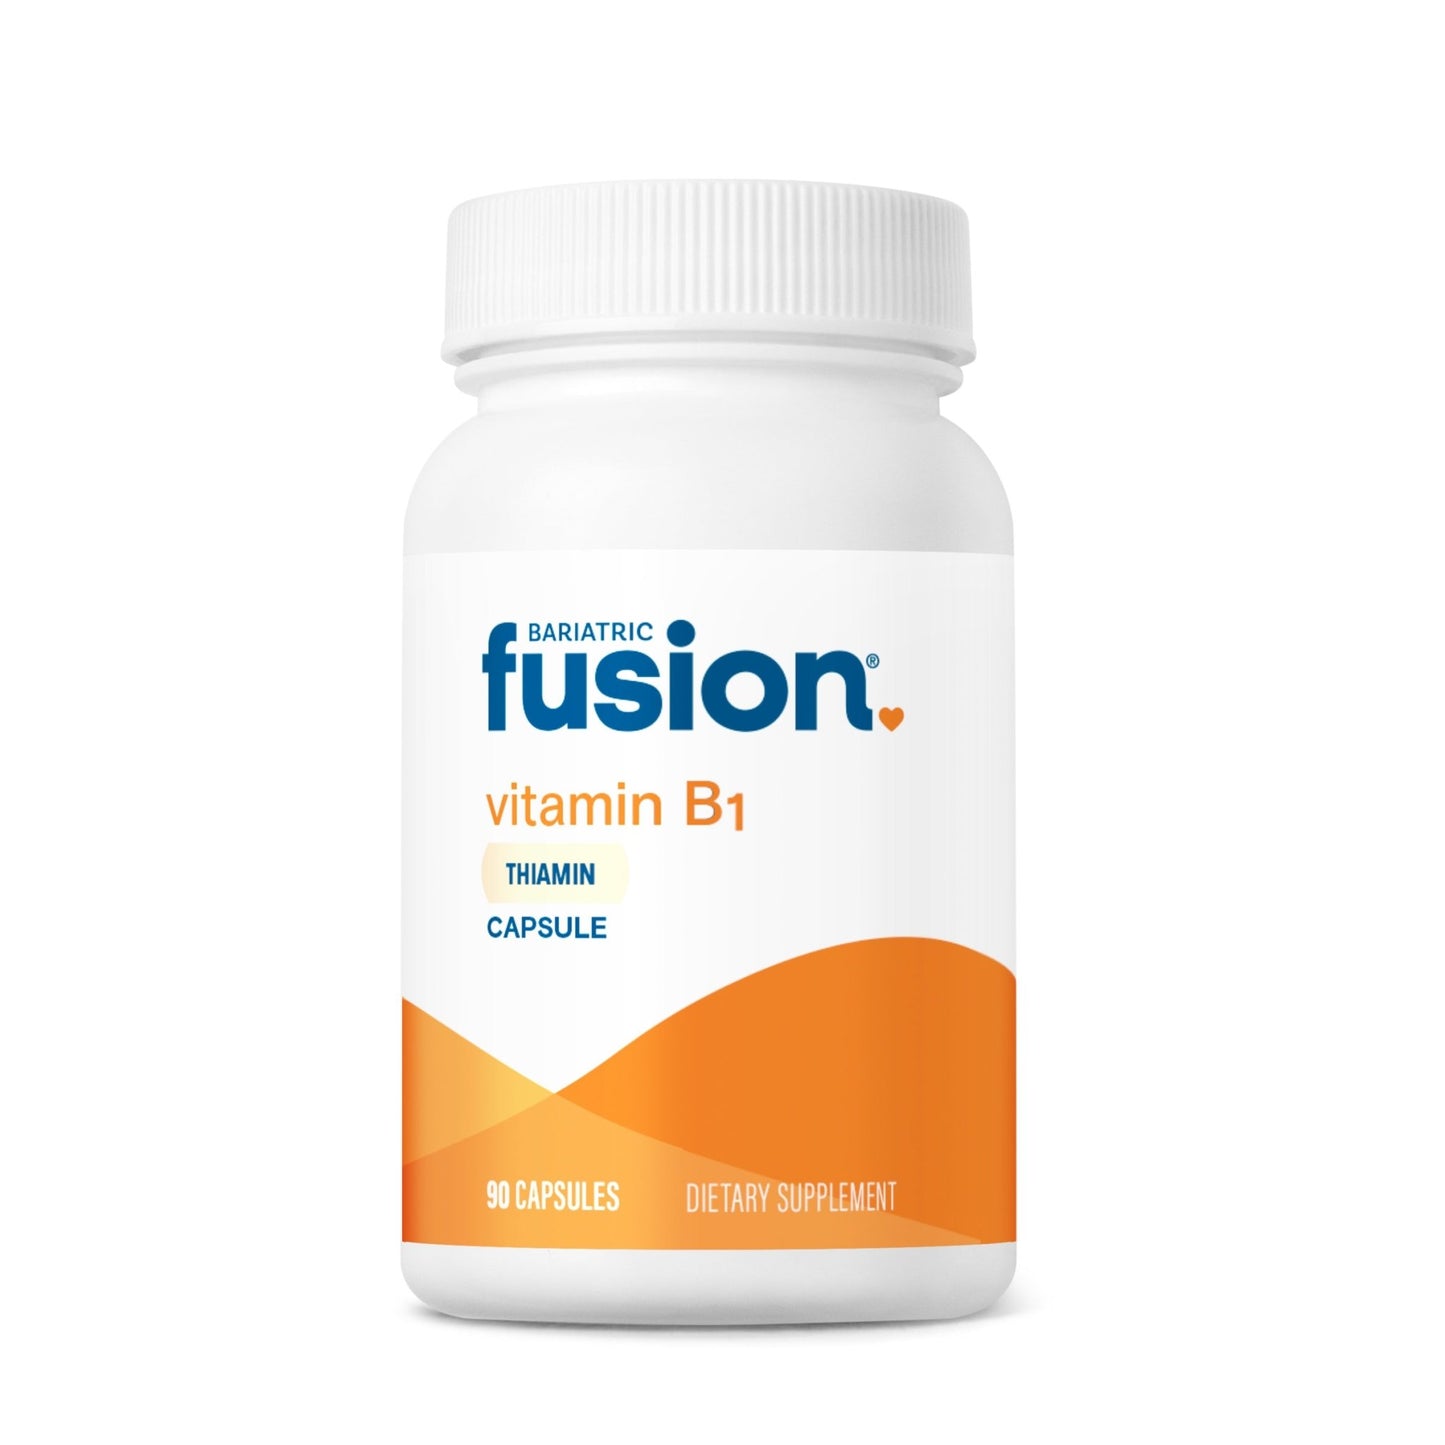 Bariatric Fusion Vitamin B1 (thiamin) 90 capsules.